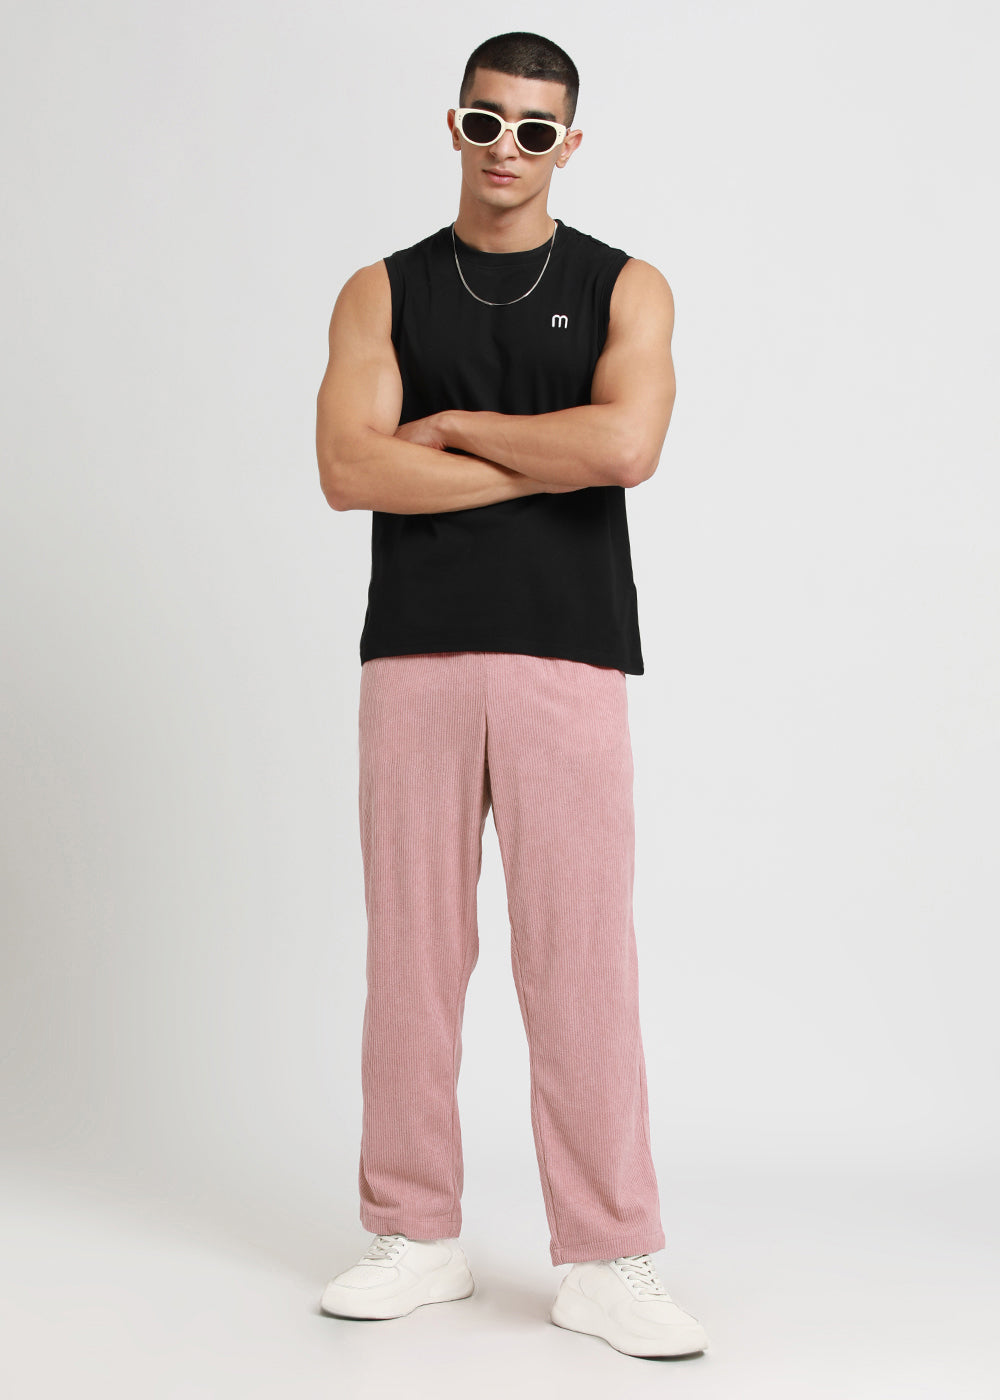 Mauve Pink Corduroy Pants